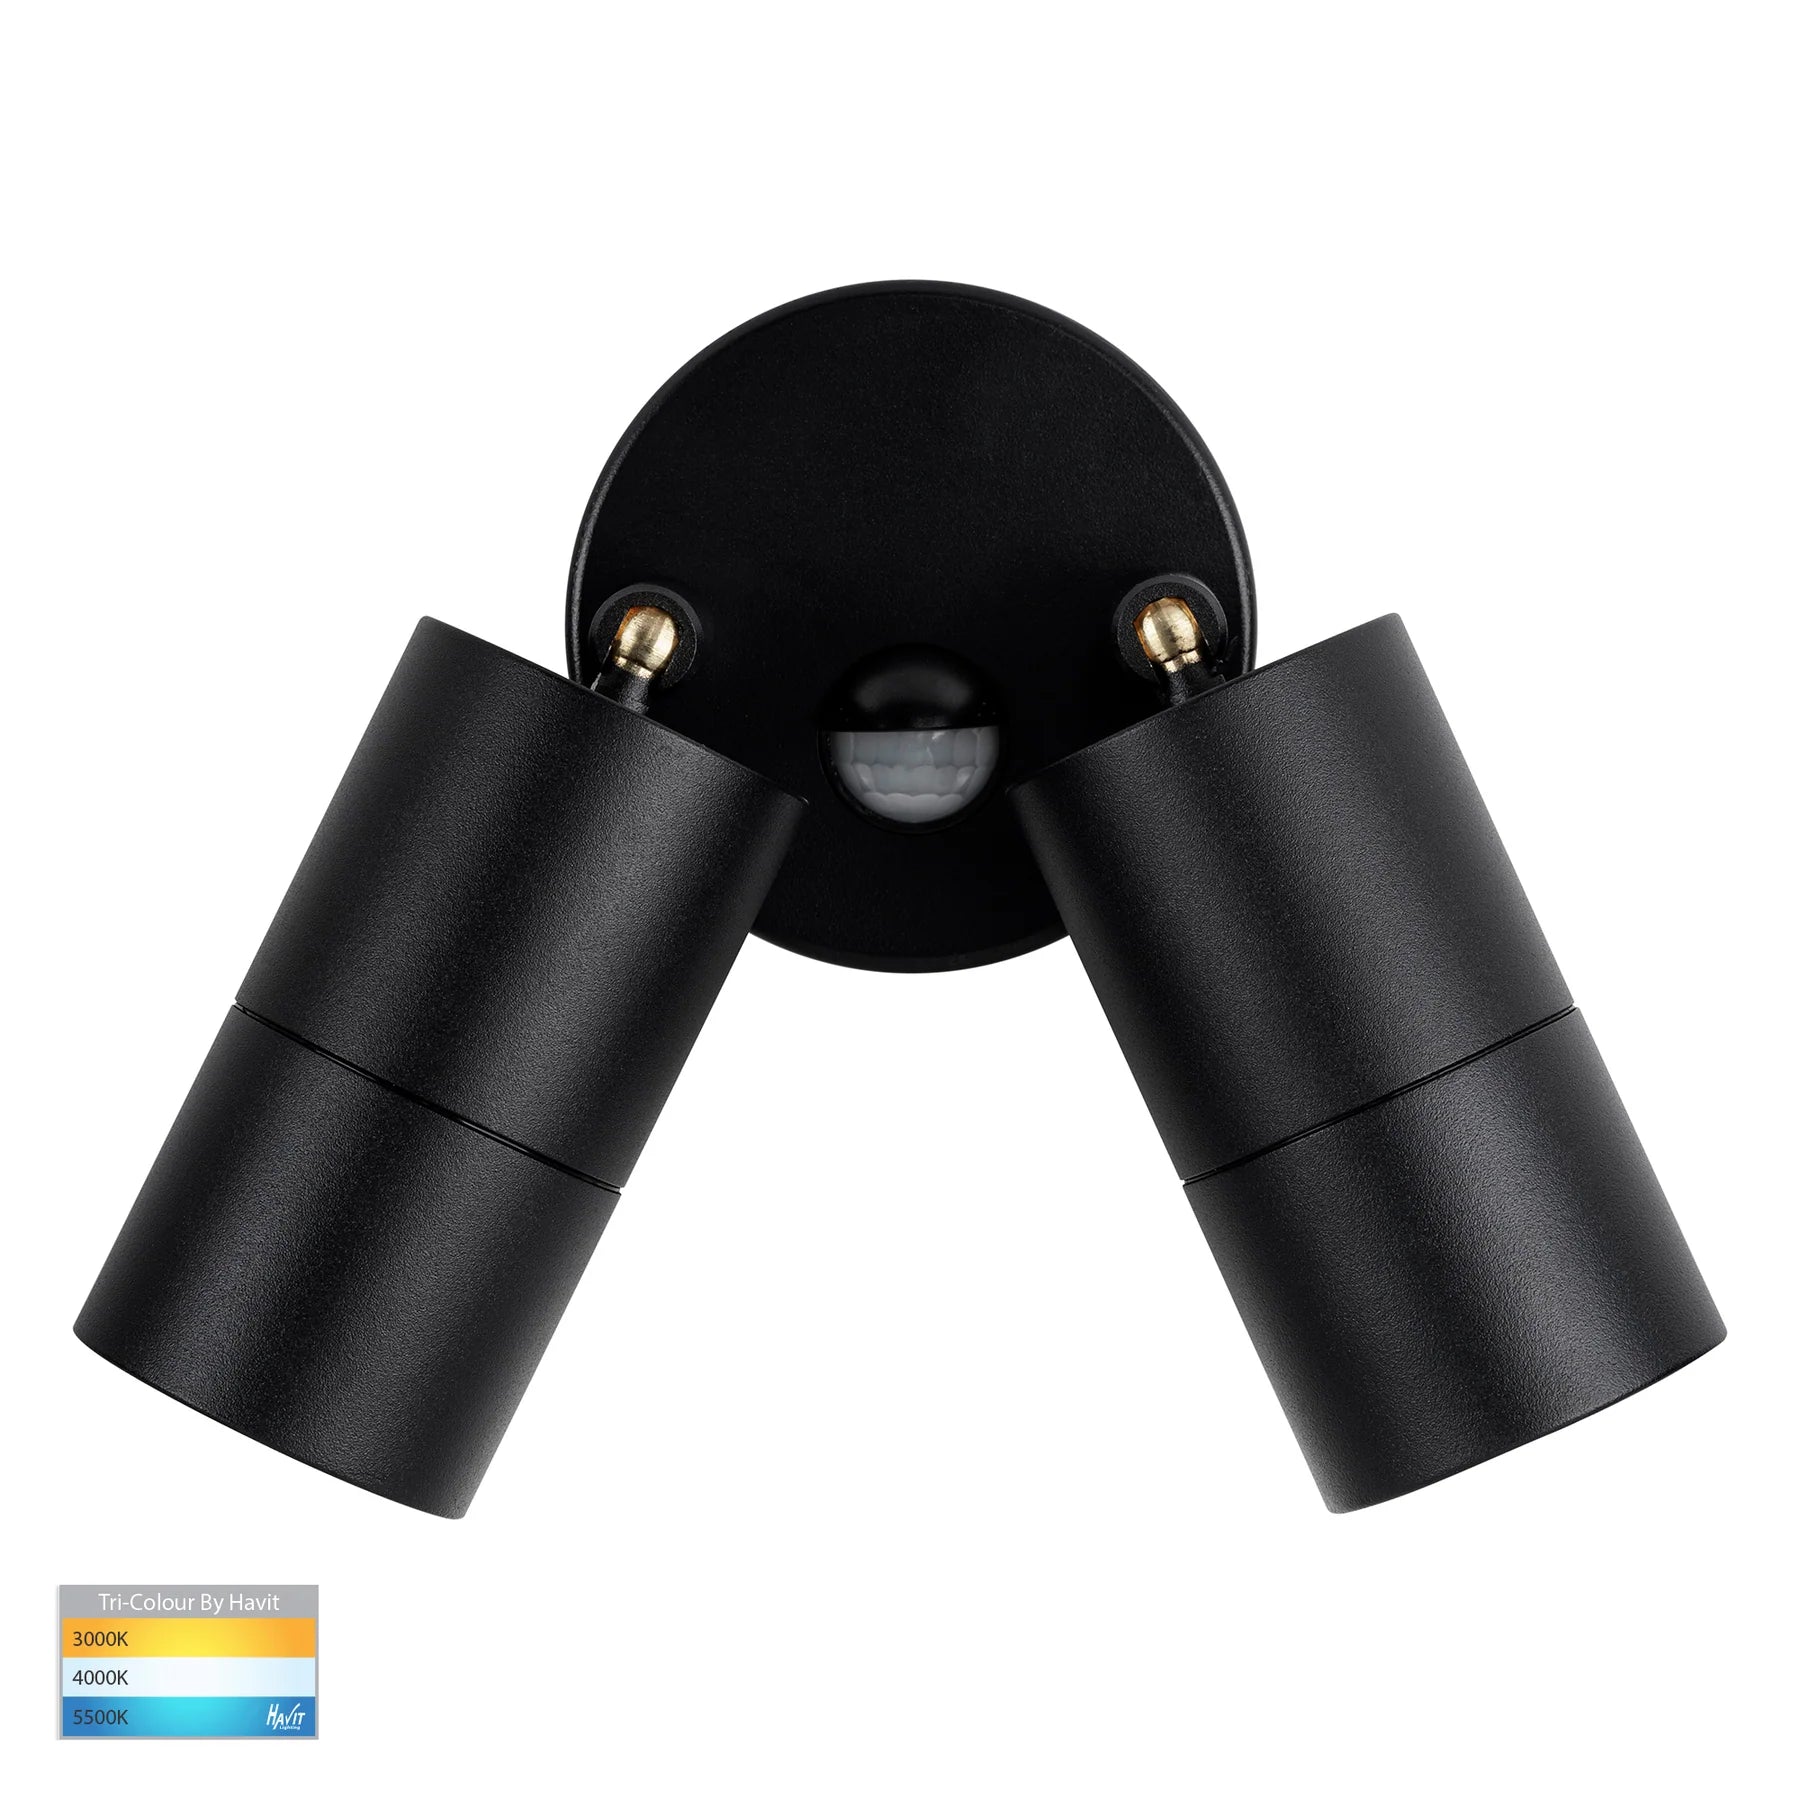 Tivah Black TRI Colour Double Adjustable Spot Lights with Sensor - HV1325T-PIR